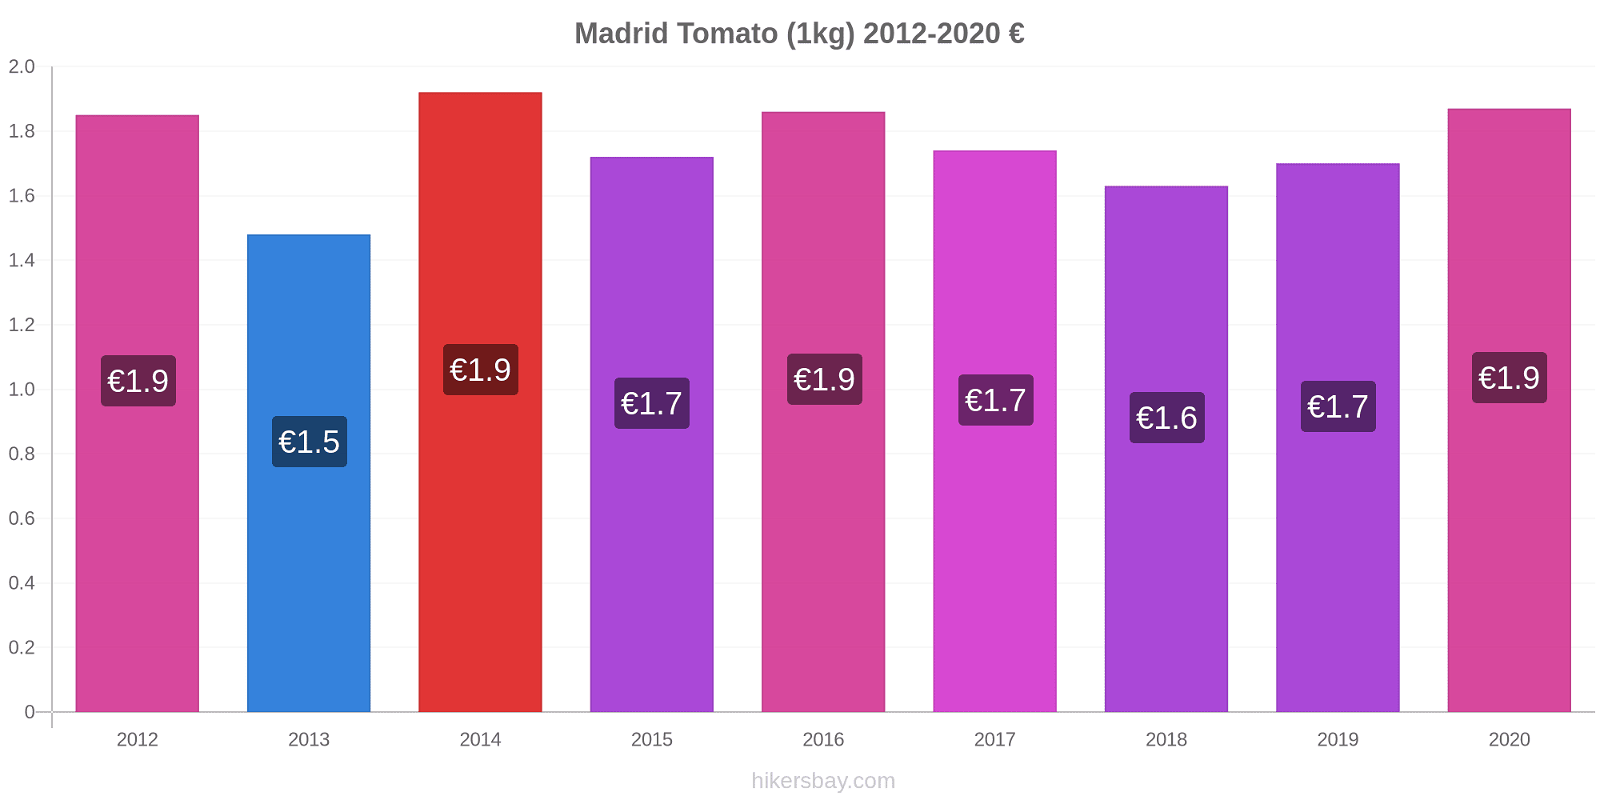 Madrid price changes Tomato (1kg) hikersbay.com